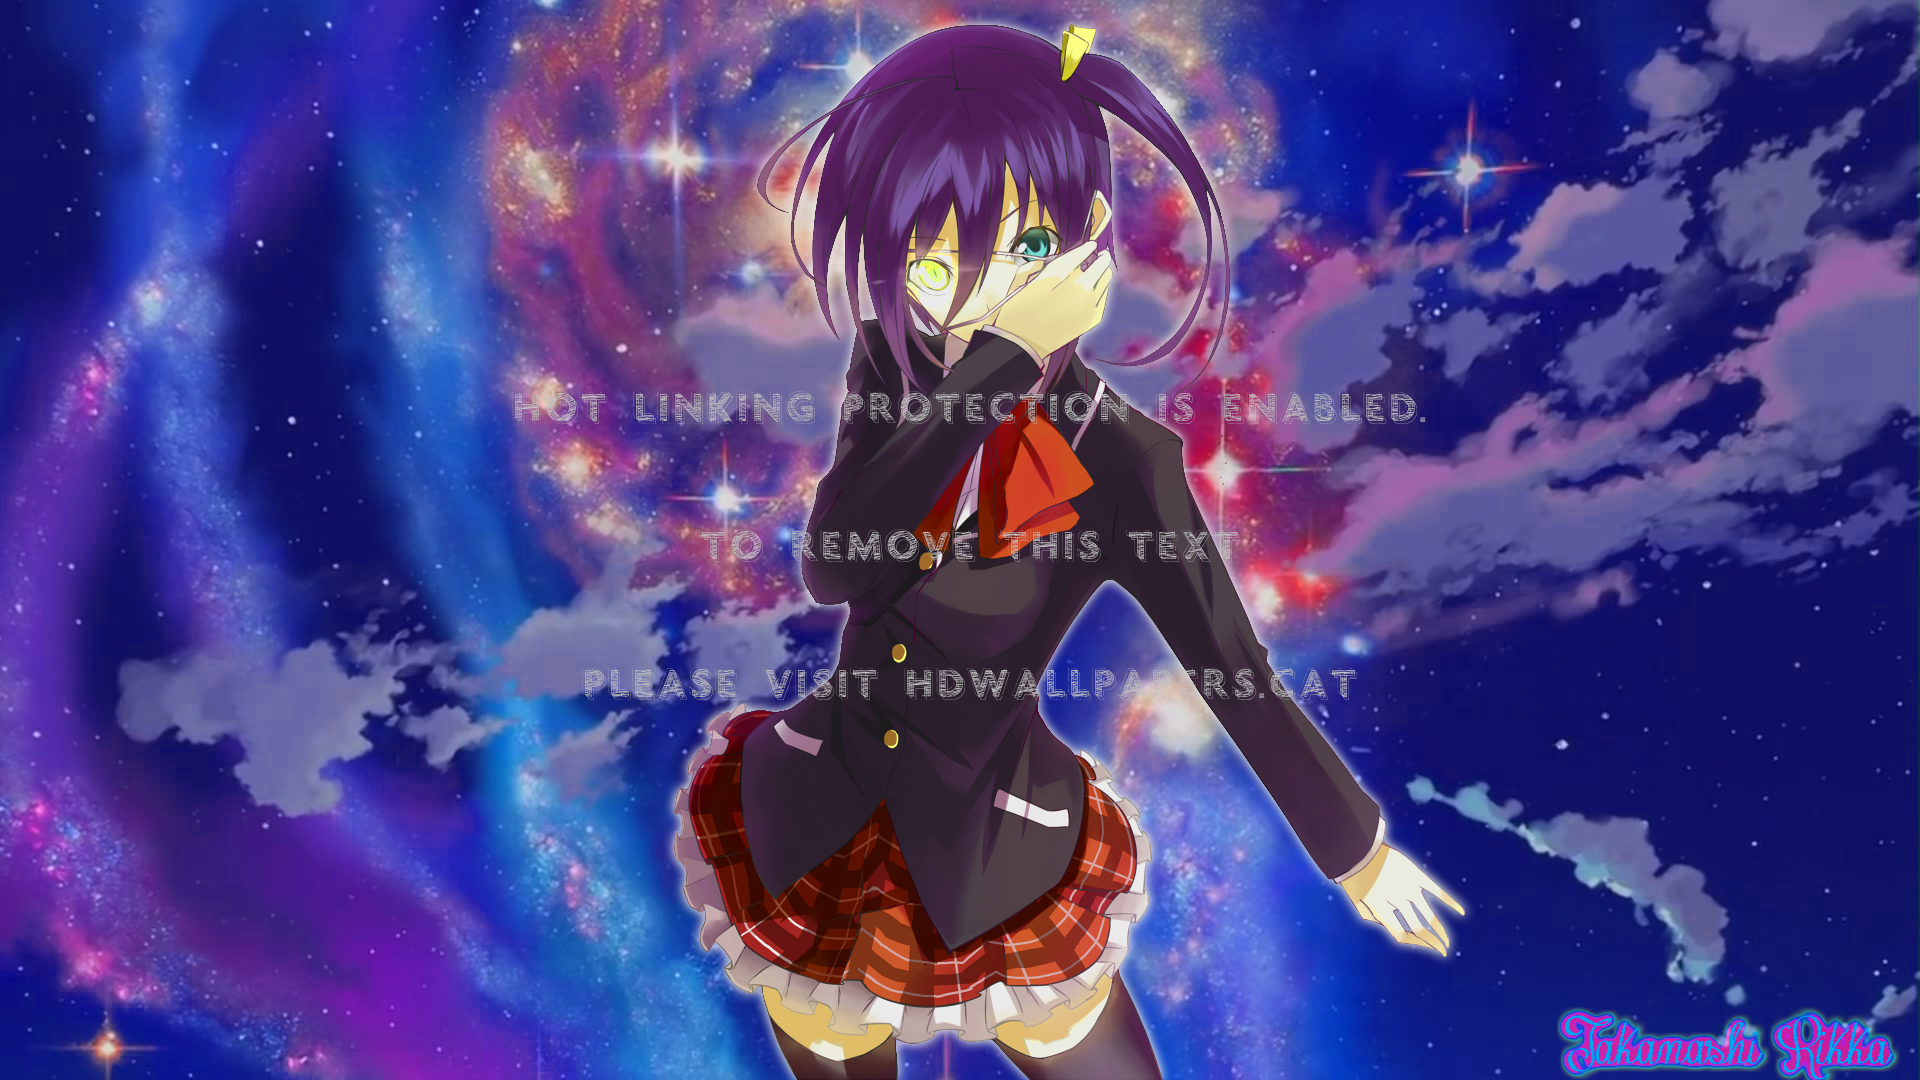 Takanashi Rikka School Anime - Tell Me How Paramore Lyrics - HD Wallpaper 